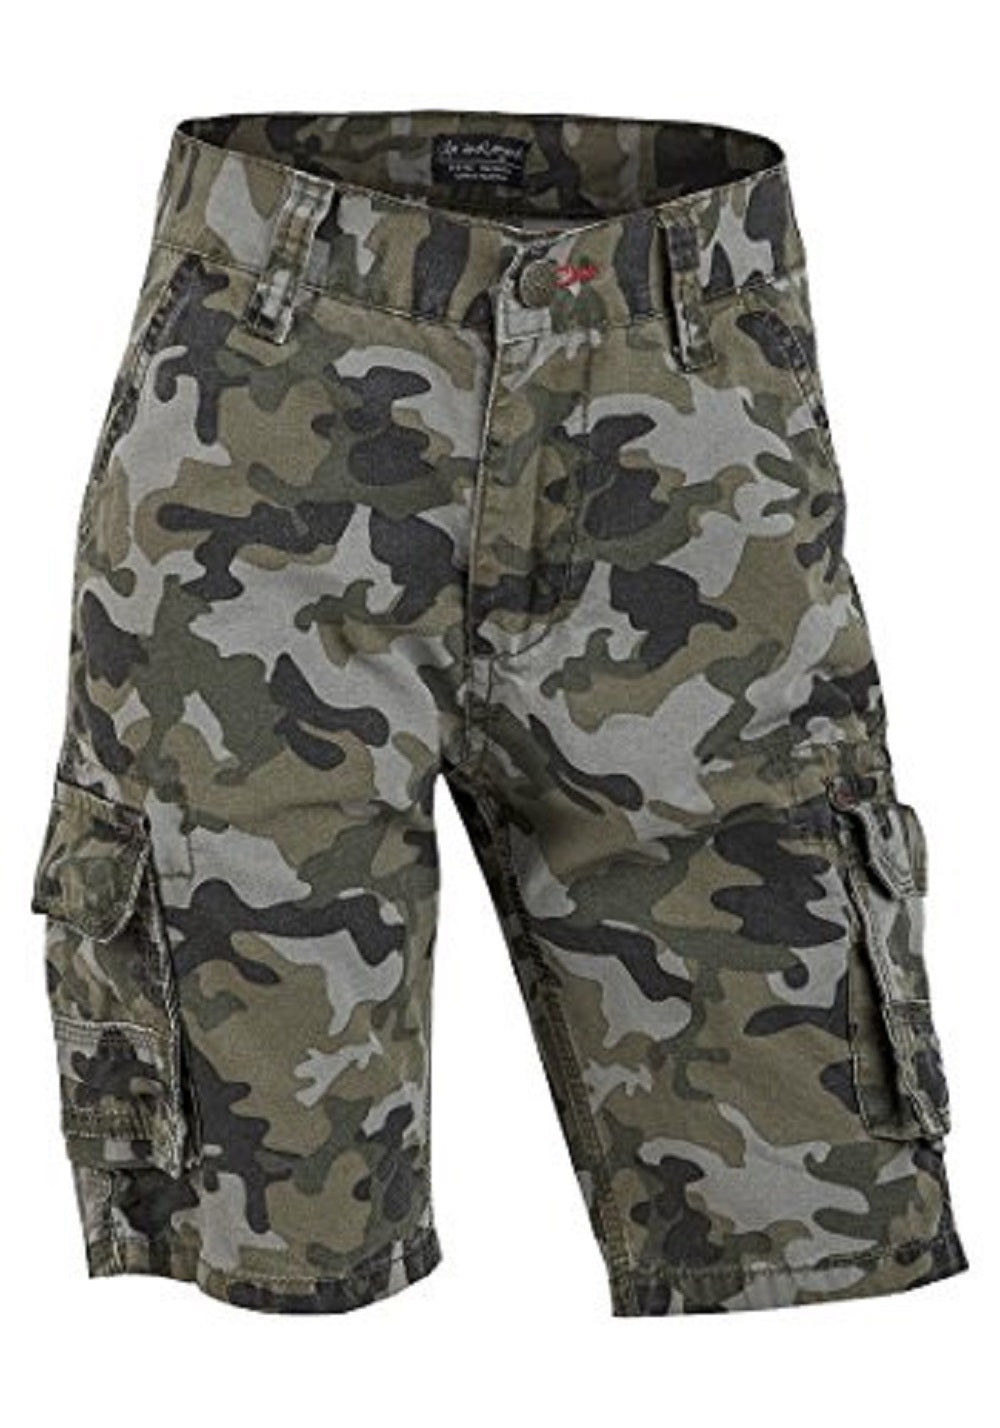 Boys Life & Legend Green Cotton Camouflage Combat Cargo Summer Shorts